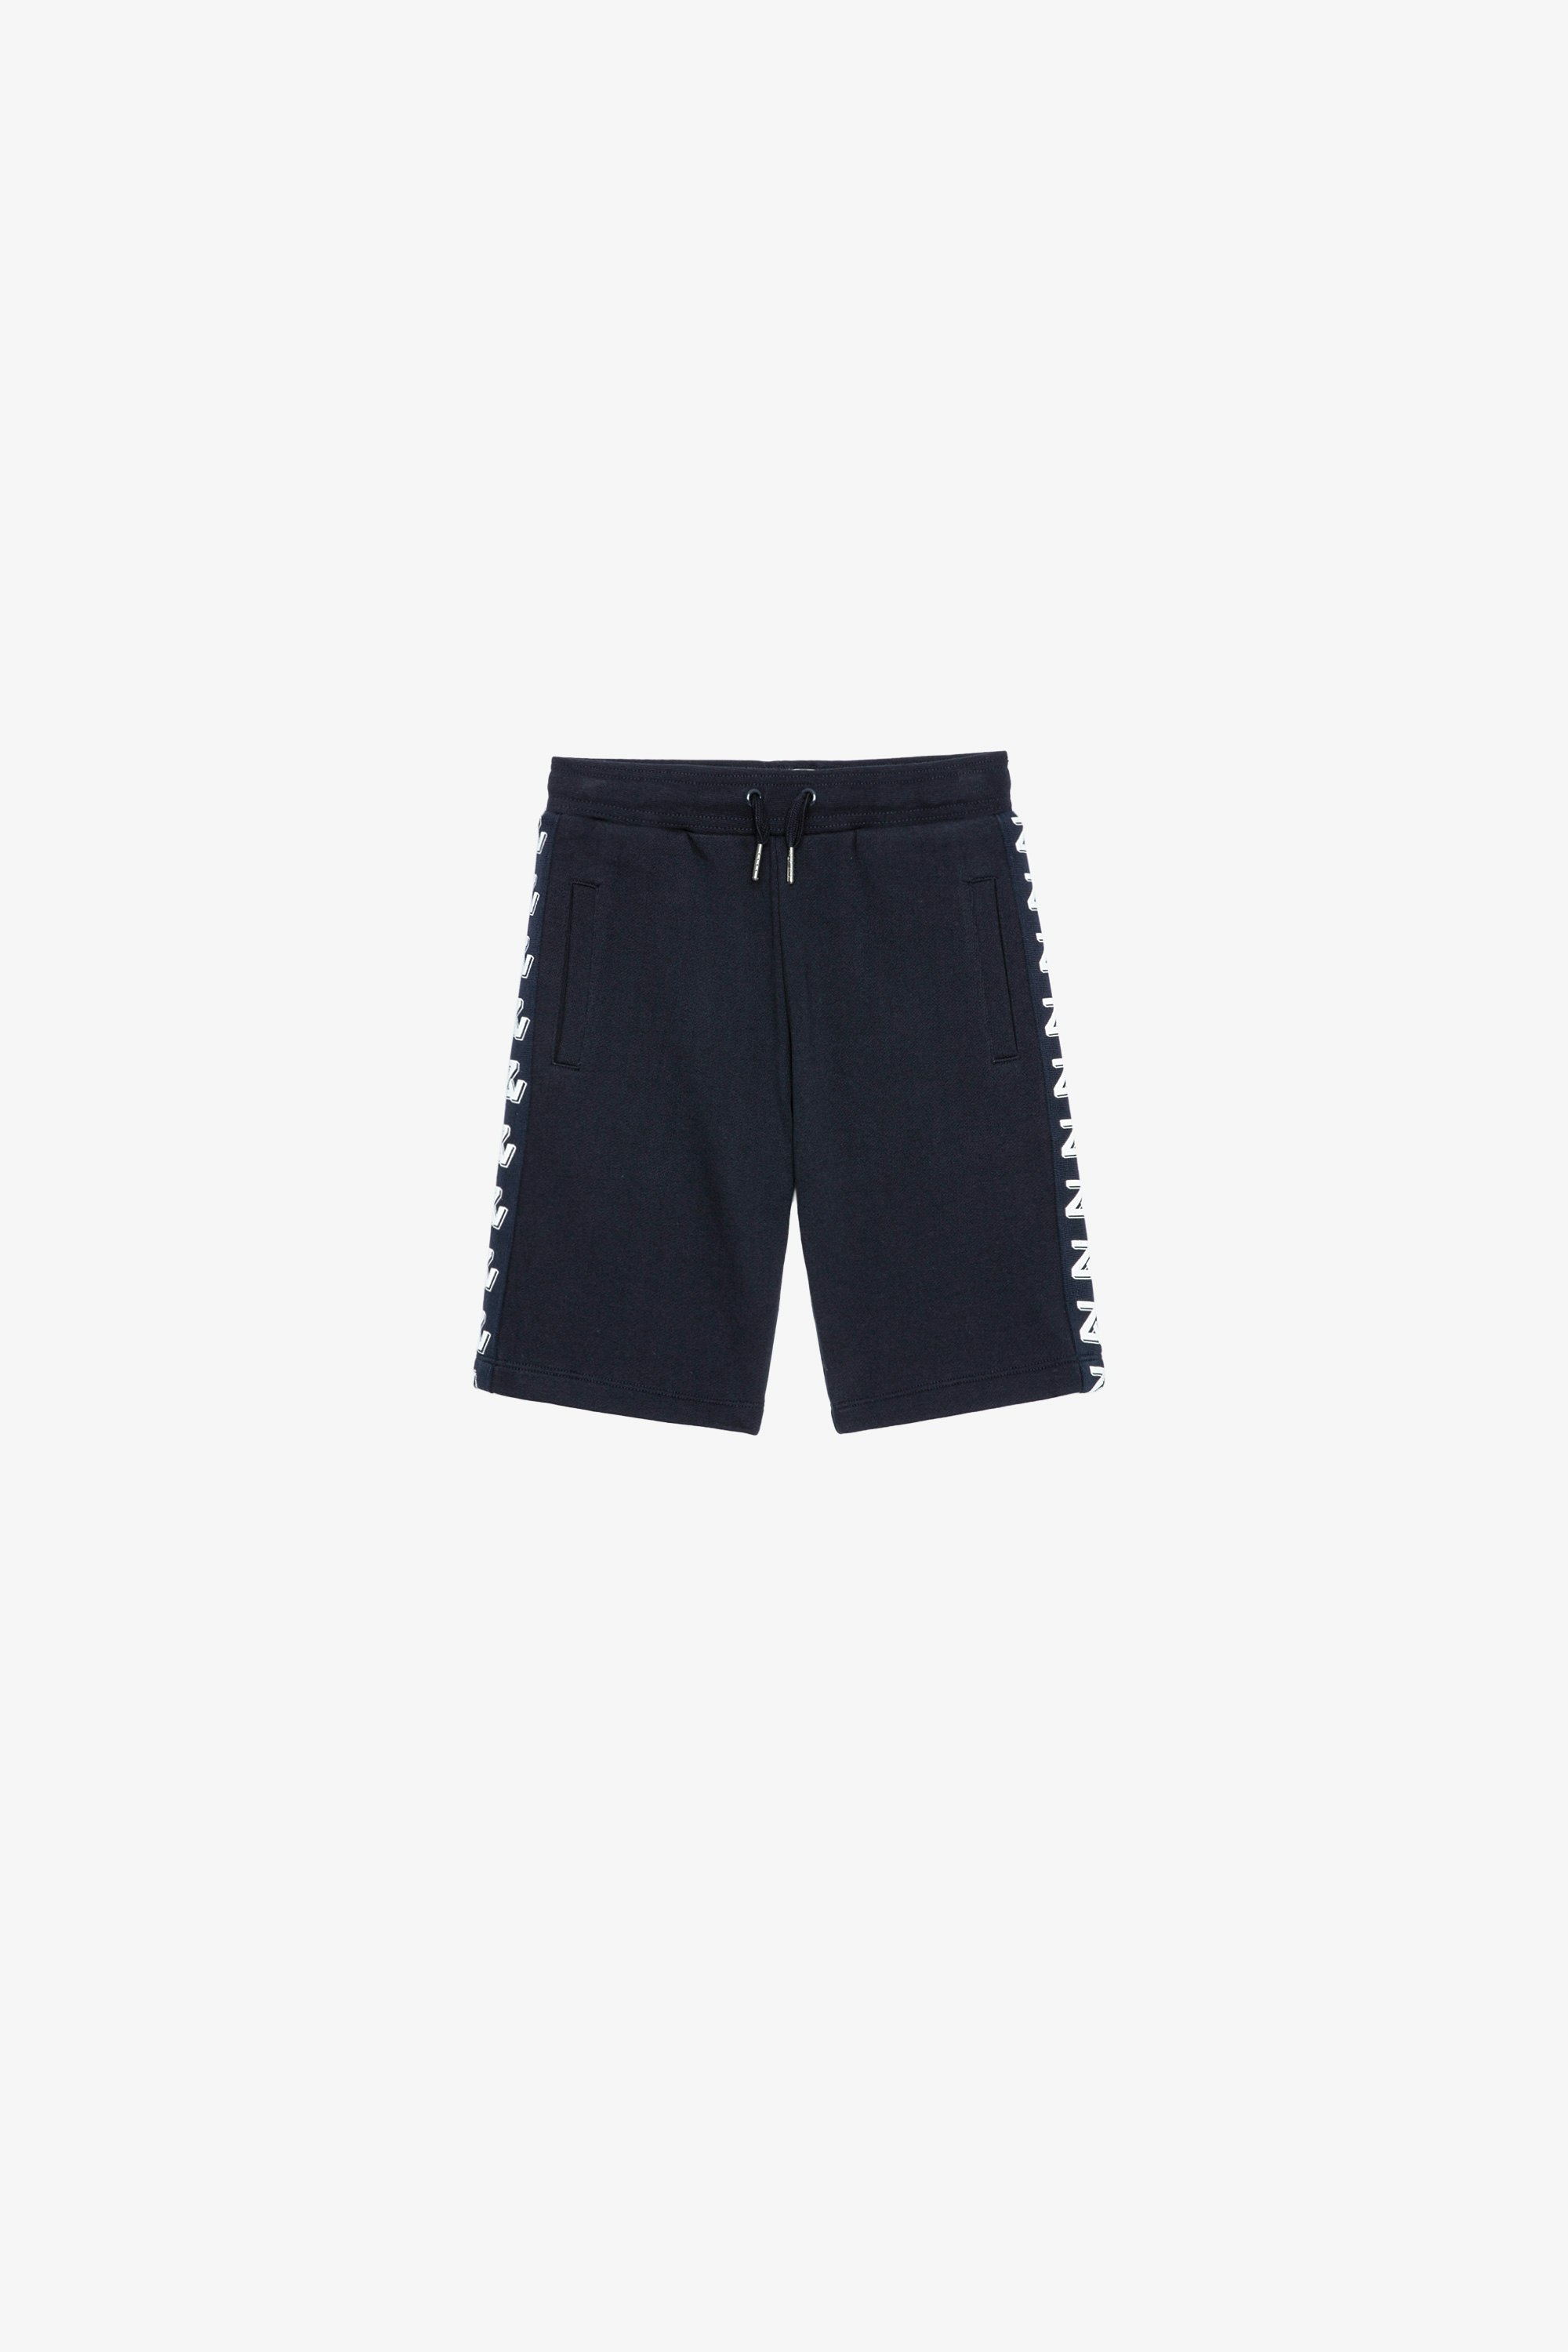 Kurt Kids' Bermudas Kids’ Bermuda shorts in blue cotton trimmed with printed braid at the sides